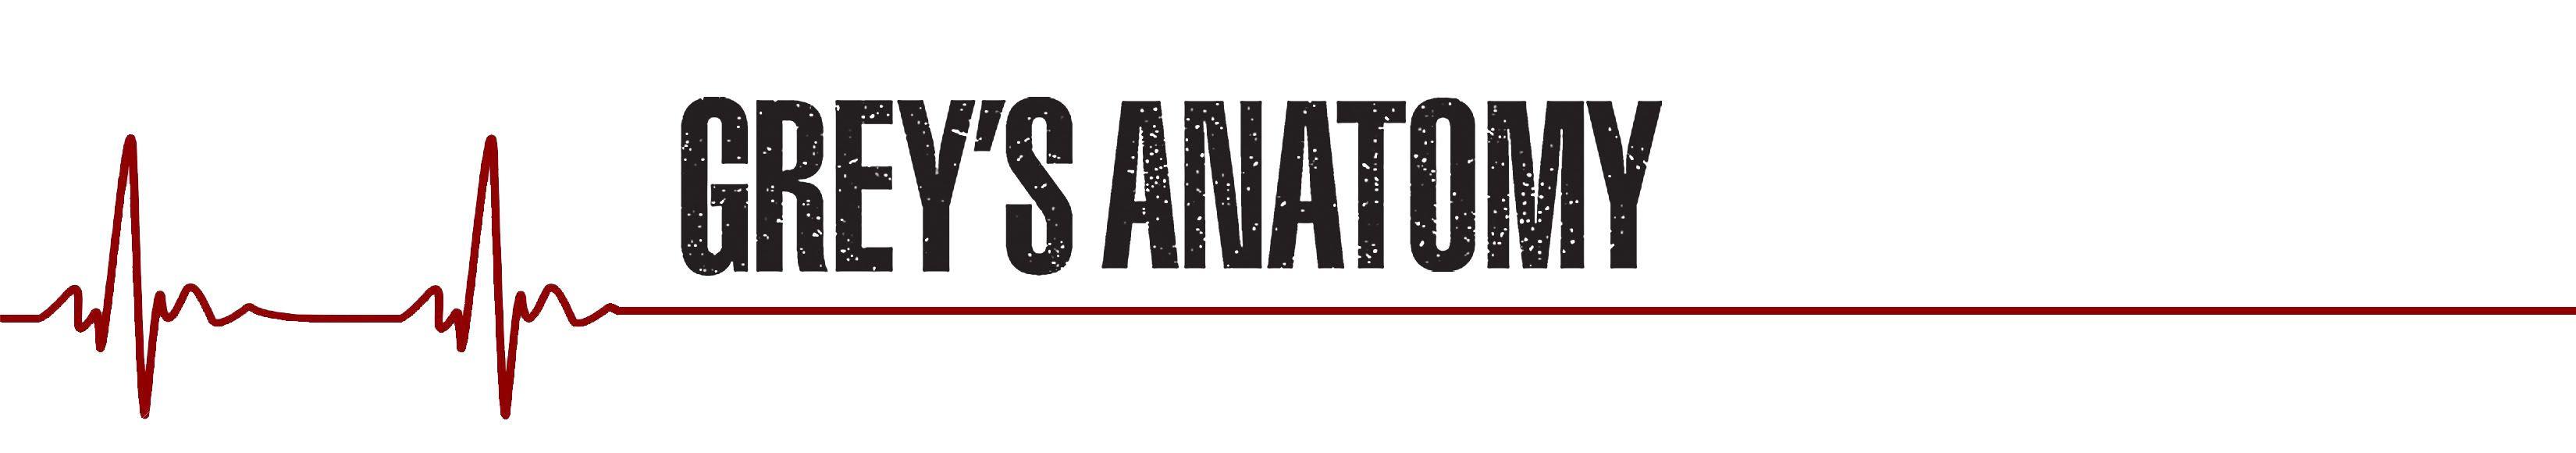 Grey's Anatomy Logo - Grey's Anatomy Website Banner | Brittany Sheehan